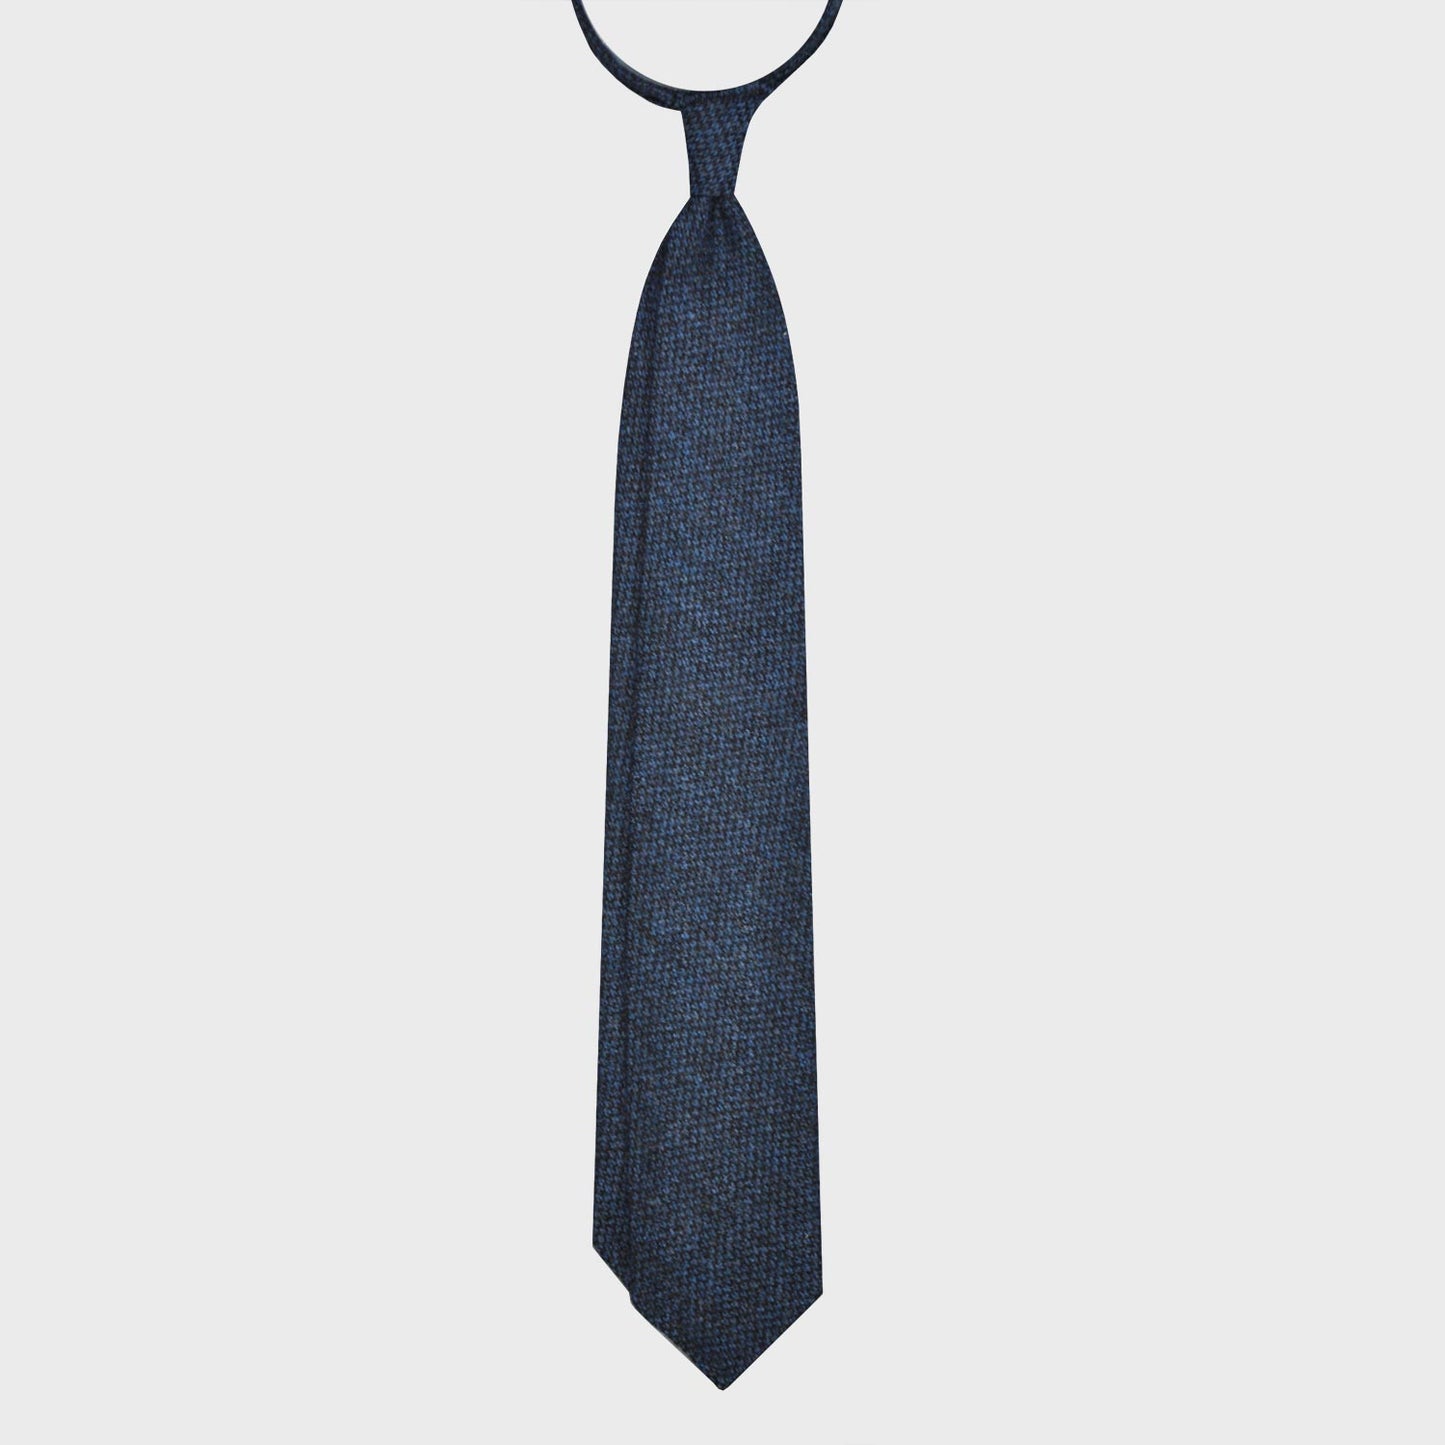 F.Marino Barleycorn Tweed Tie 3 Folds Denim Blue-Wools Boutique Uomo